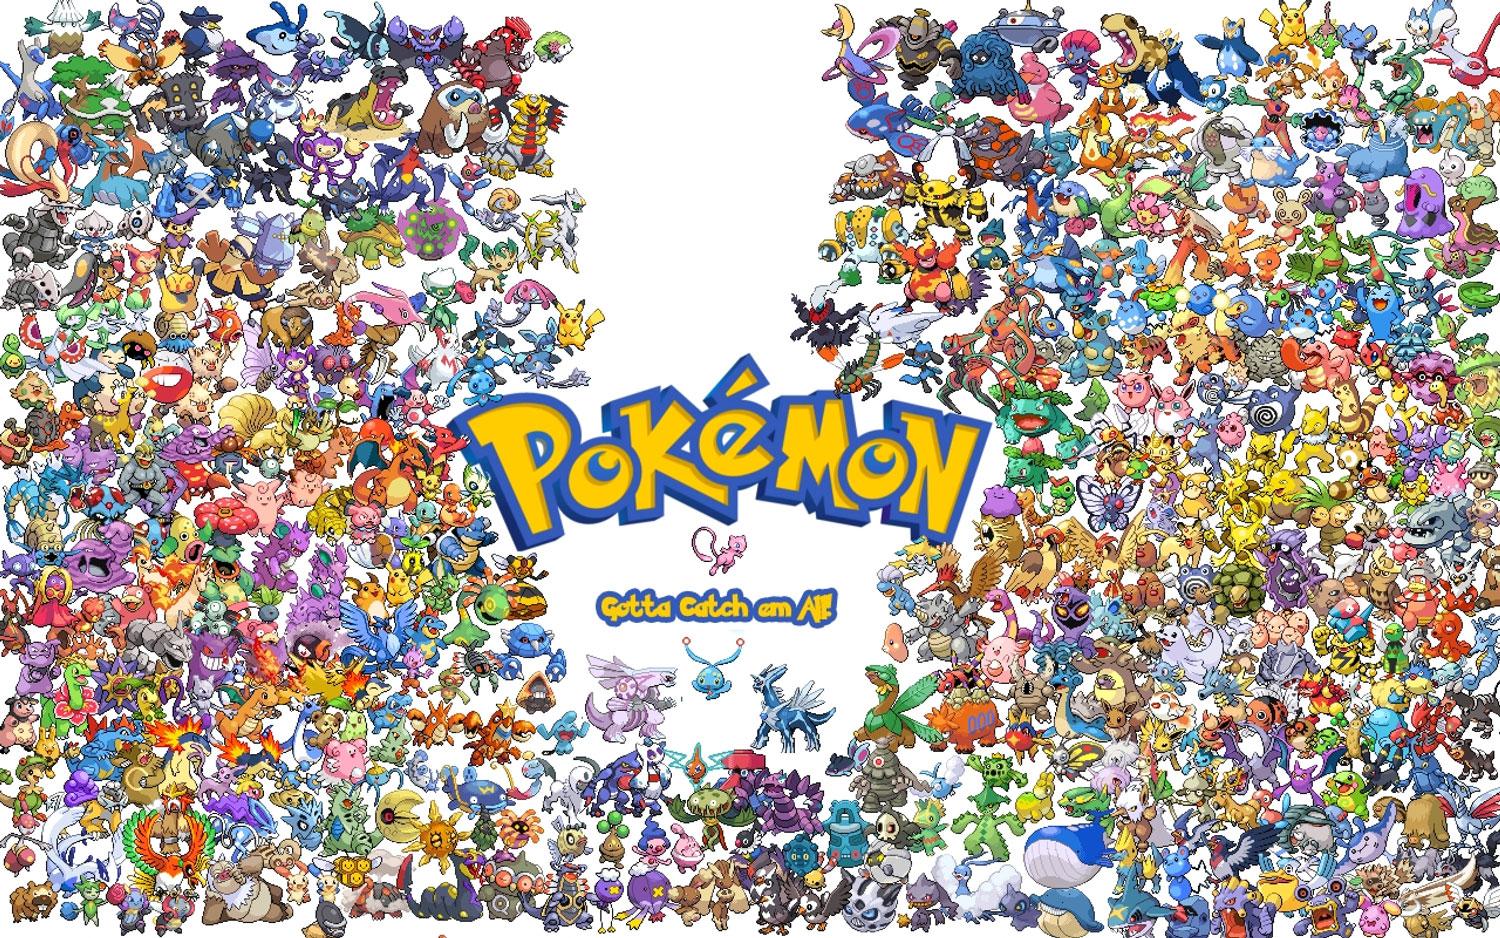 Screenshot of Pokemon promotion featuring Mew.